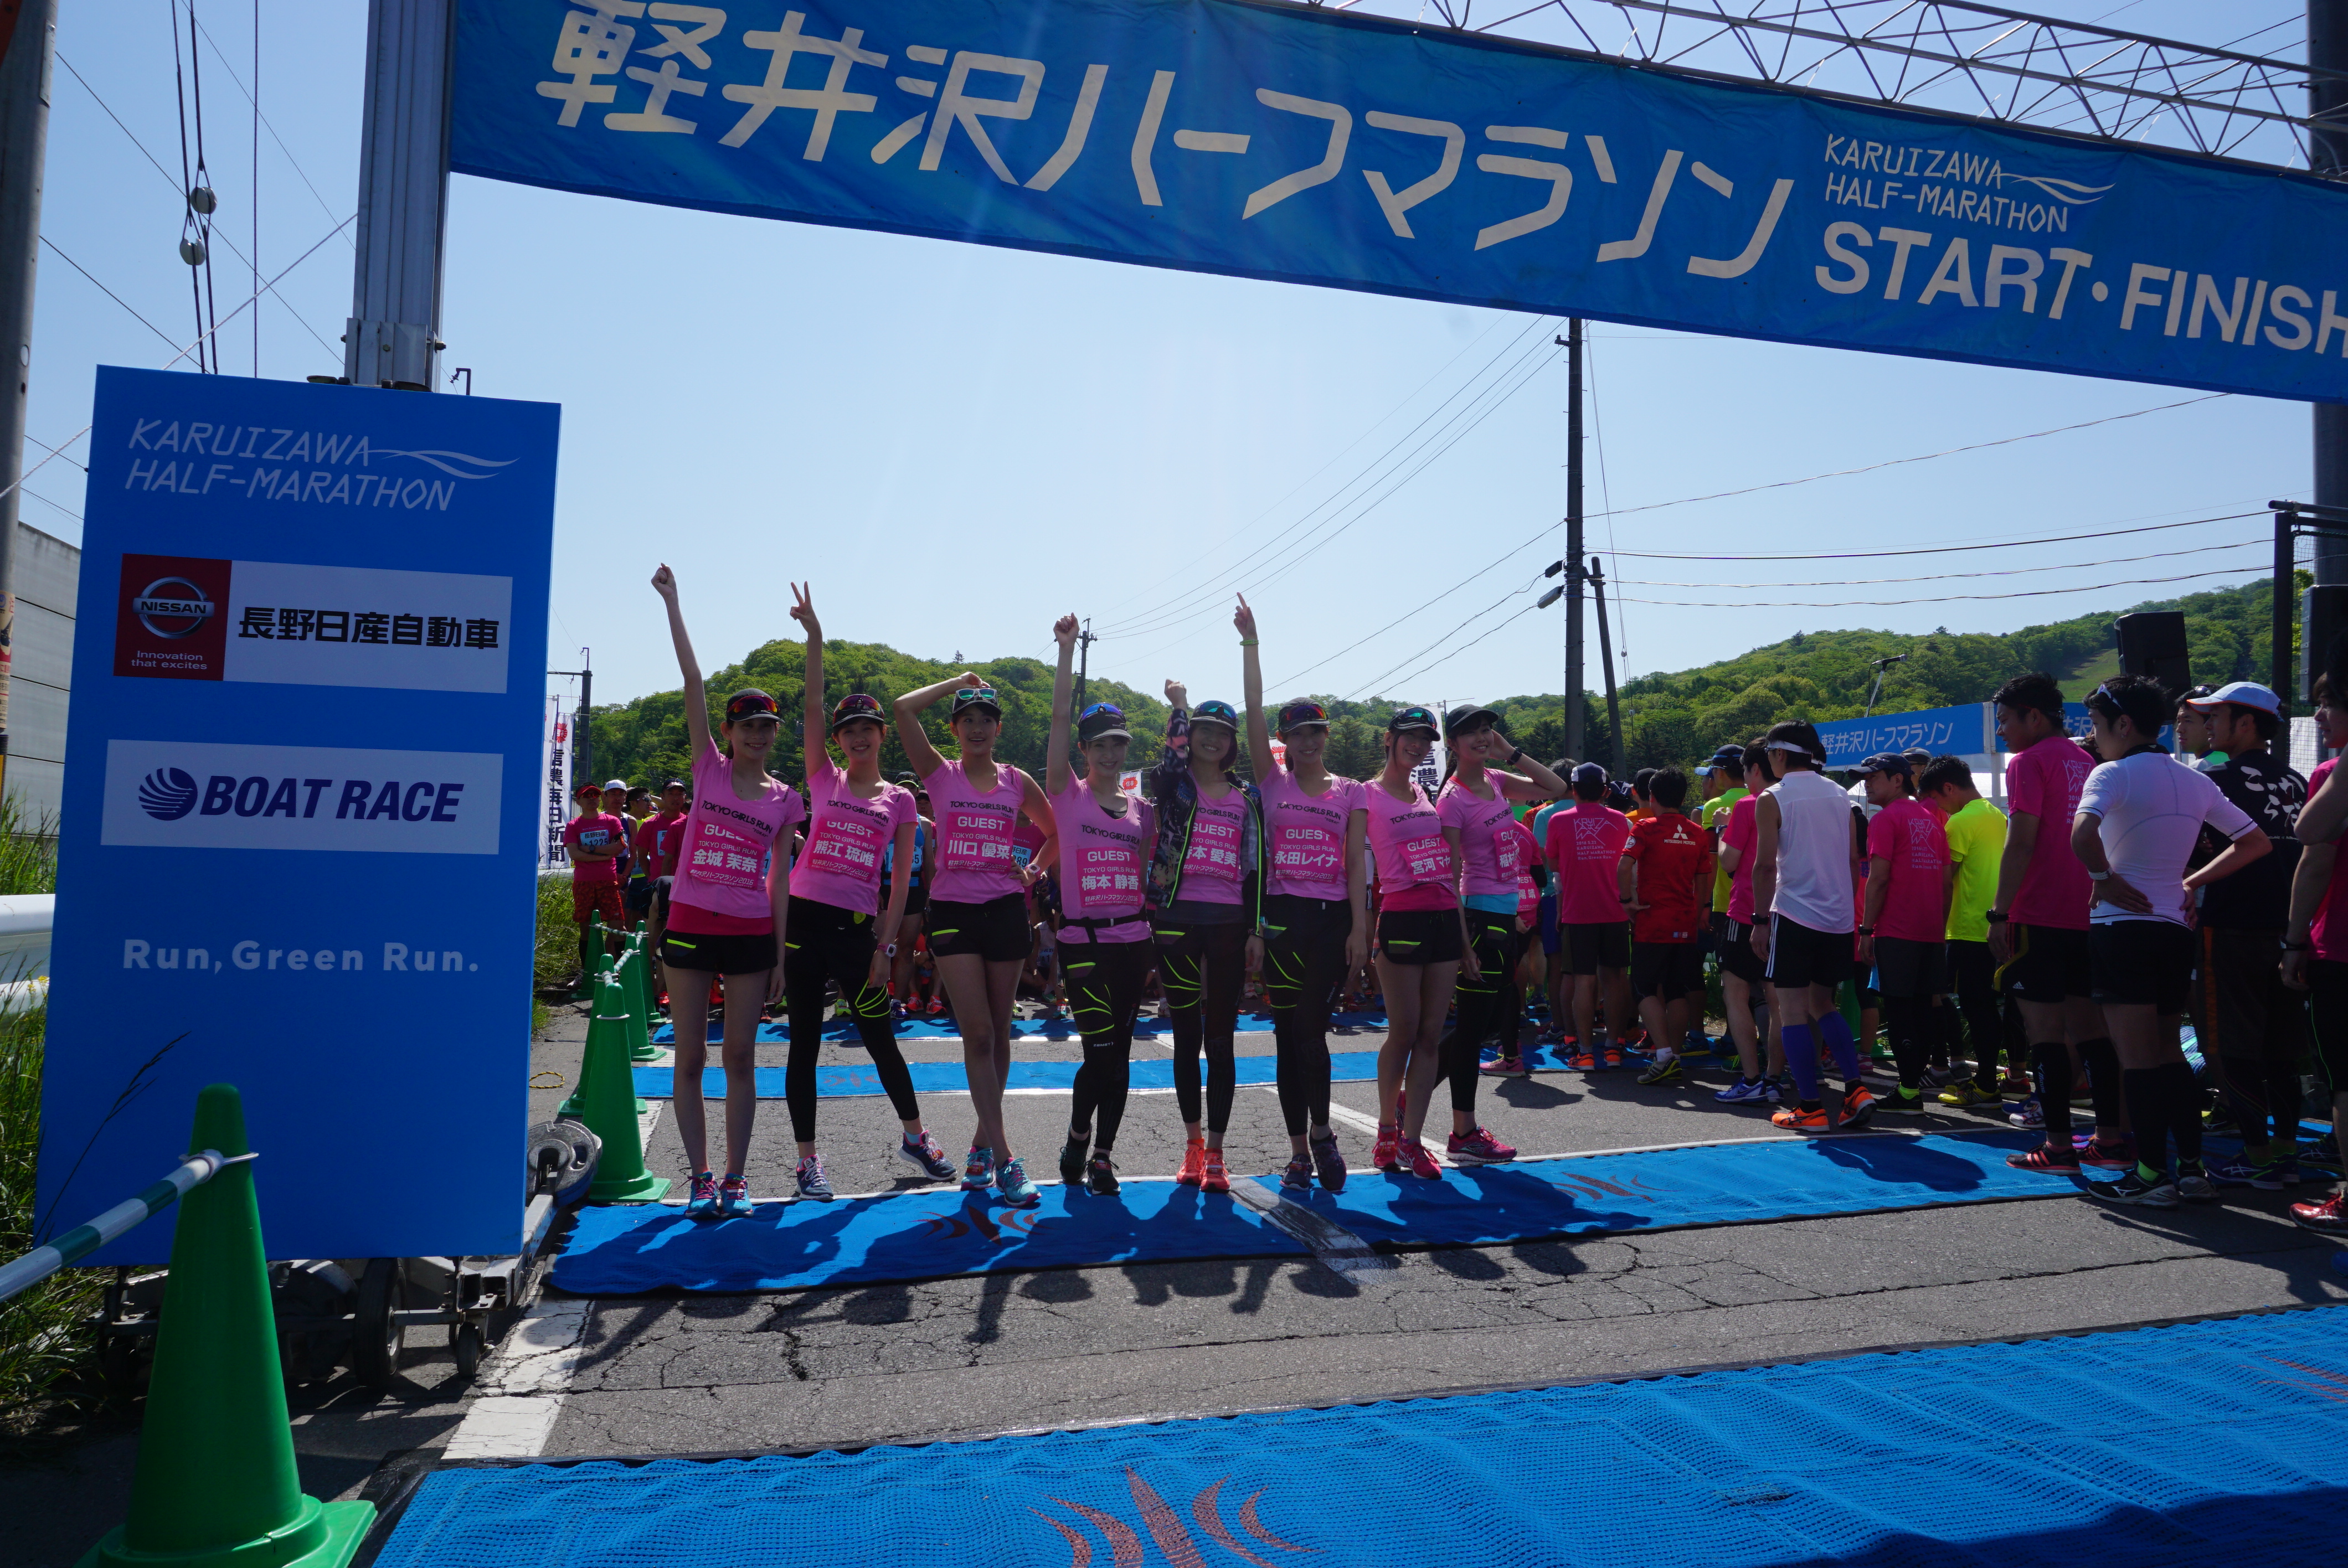 Tokyo Girls Run Tgr 軽井沢ハーフマラソン16レポート 日時 16年5月22日 日 Start 9 00 株式会社w Tokyoのプレスリリース